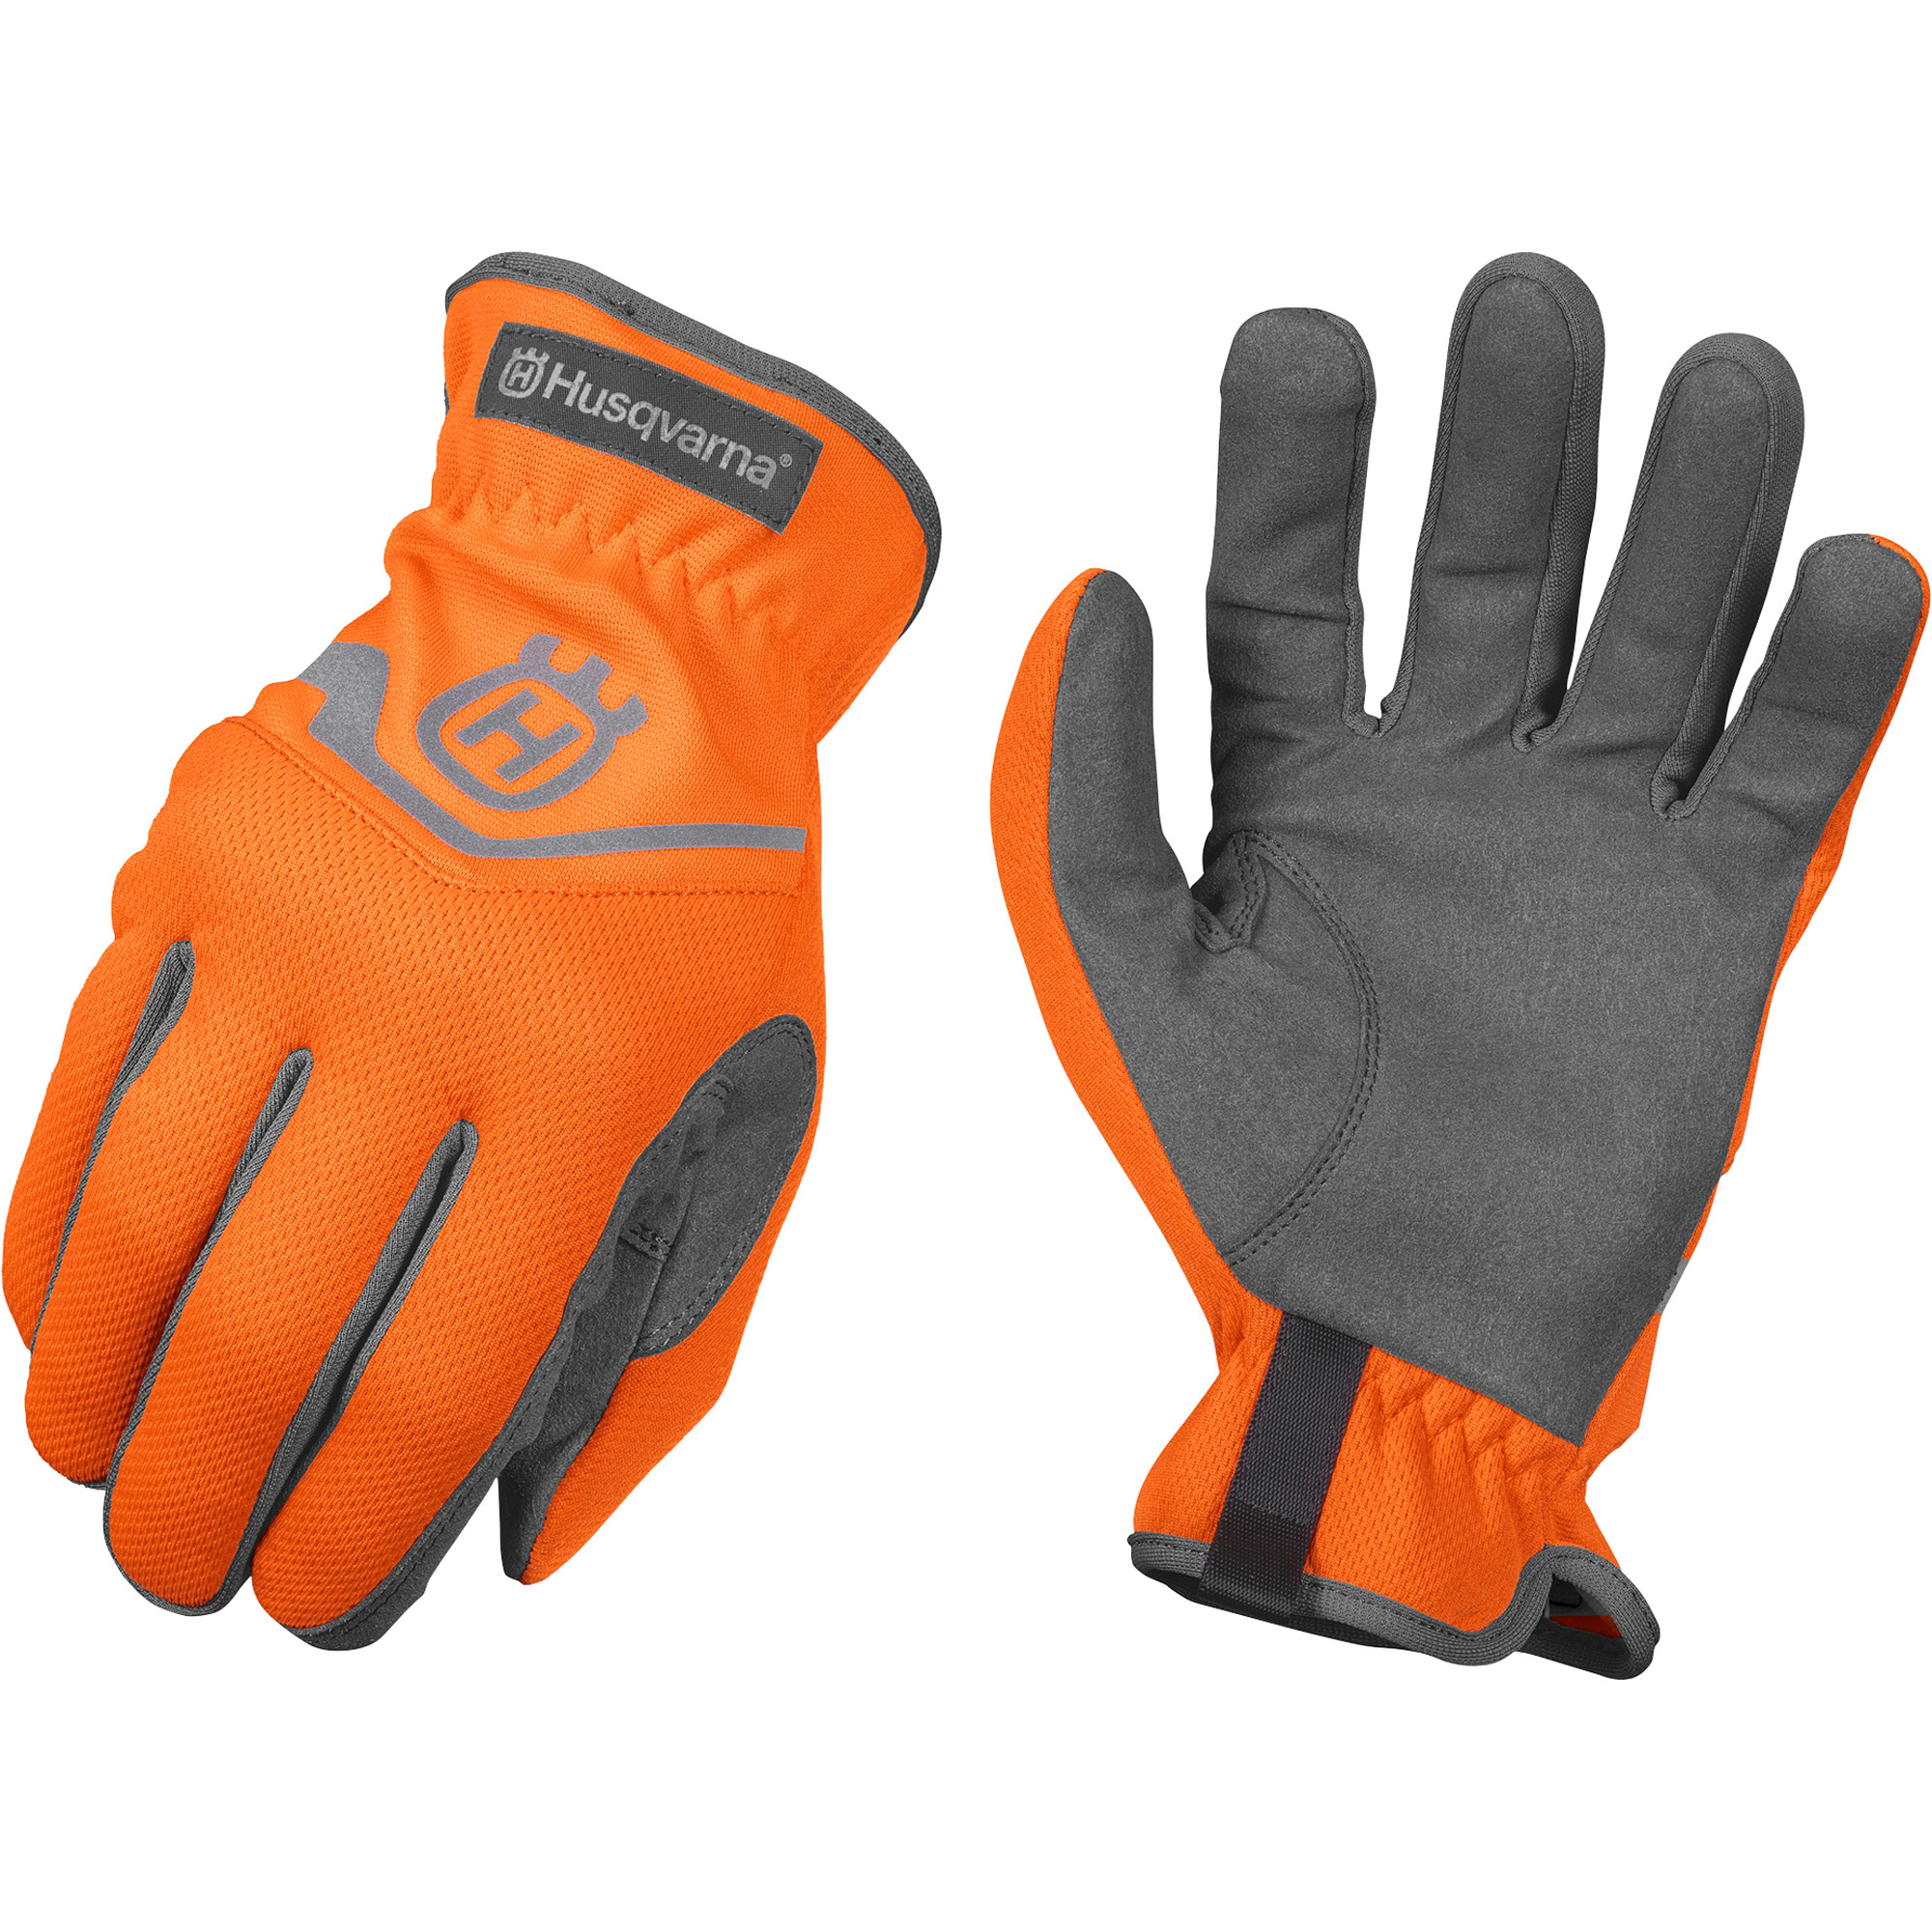 Husqvarna Classic Work Gloves âLarge Size, Orange/Gray